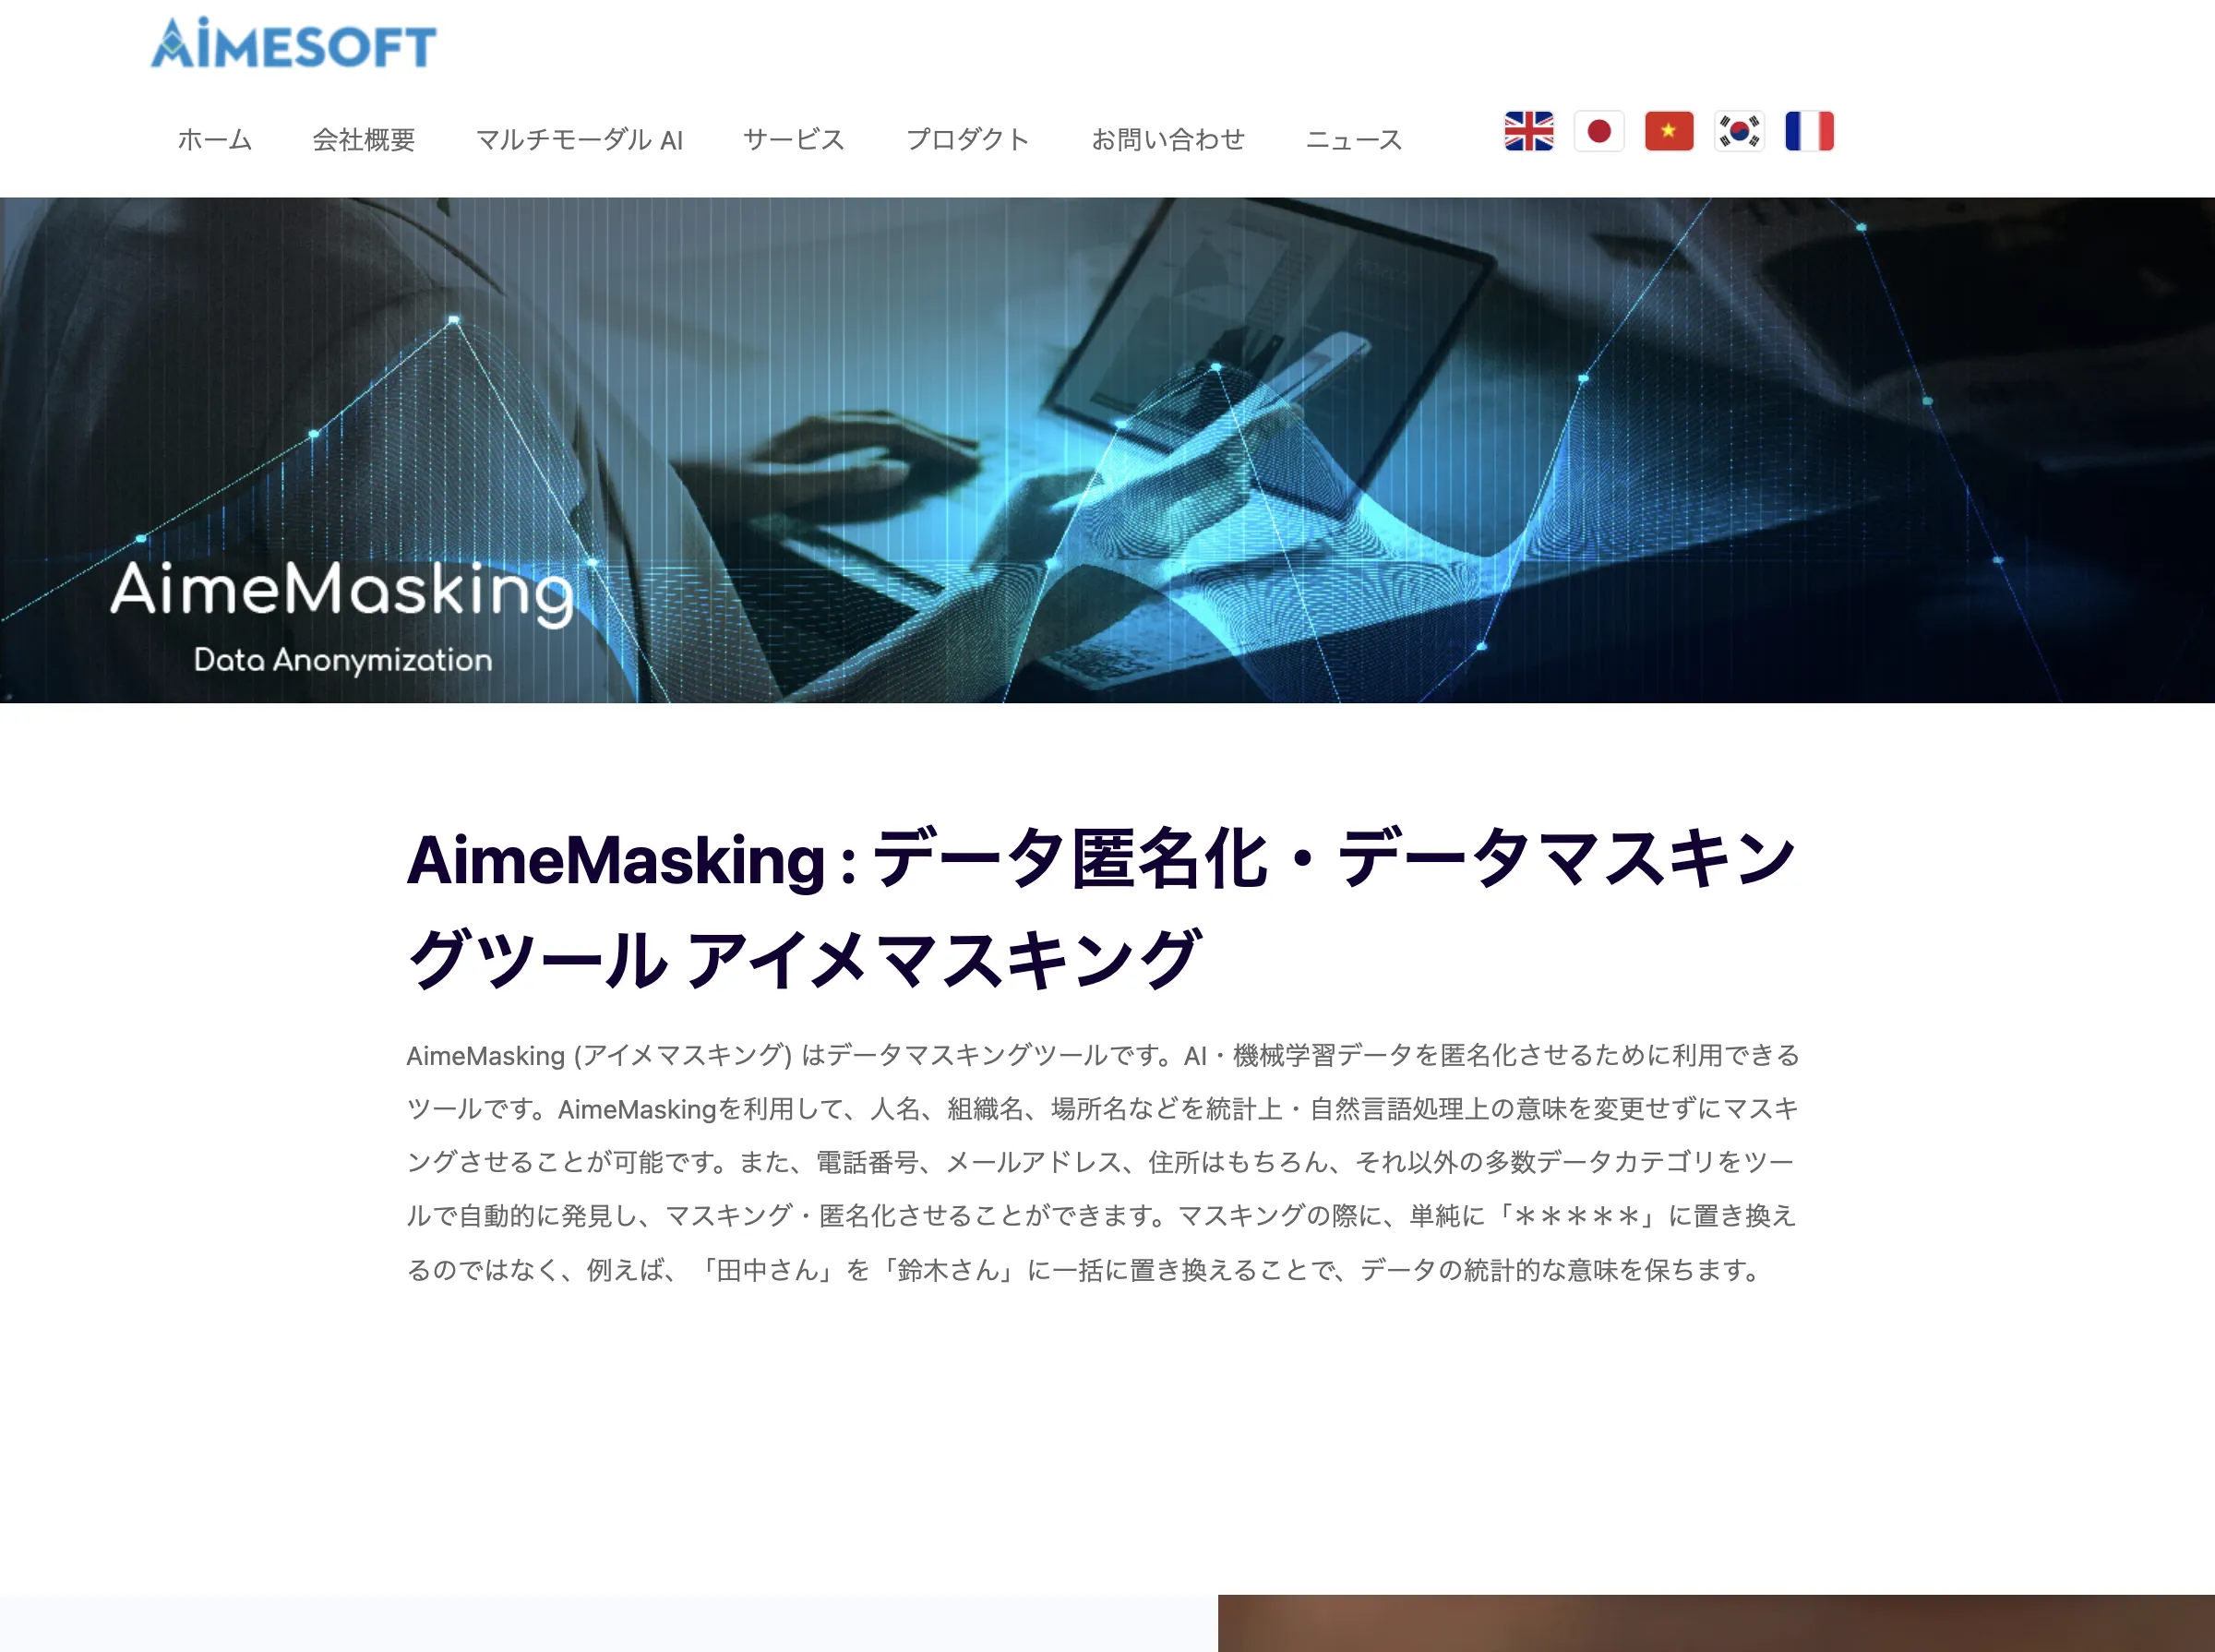 AimeMasking(株式会社アイメソフト・ジャパン)